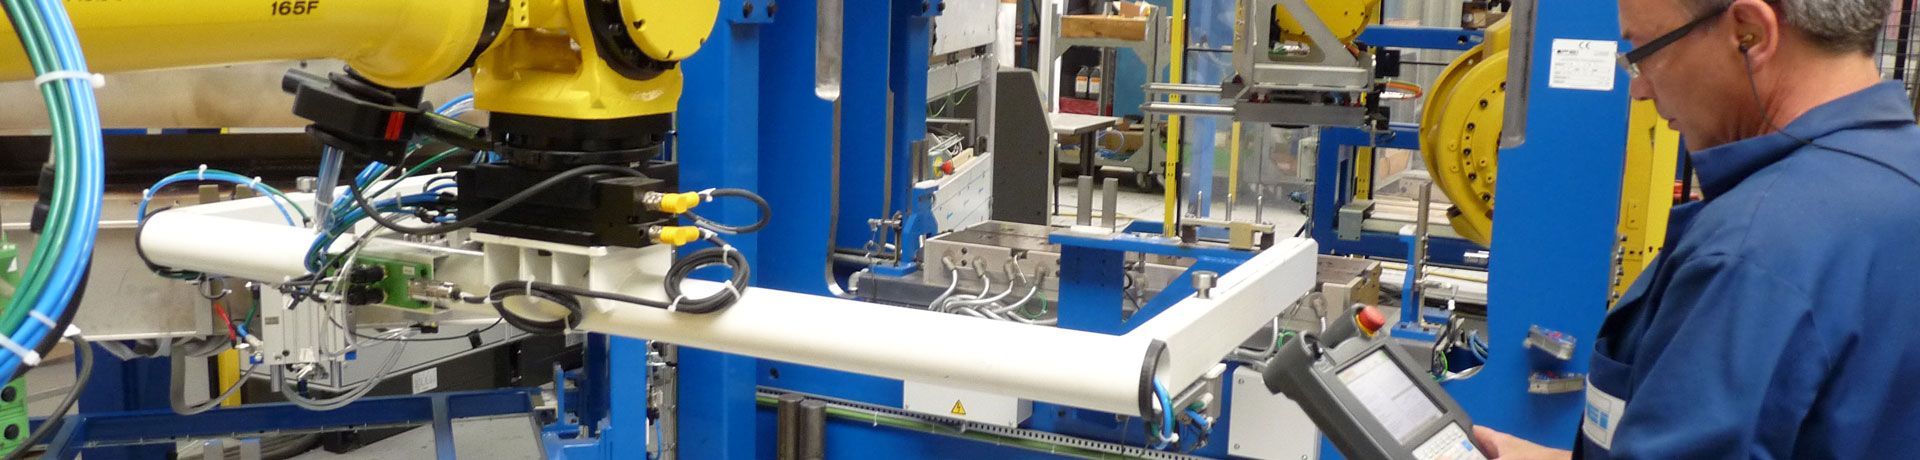 Pinette是一家复合材料预成型和成型的液压机与自动冲压系统供应商。